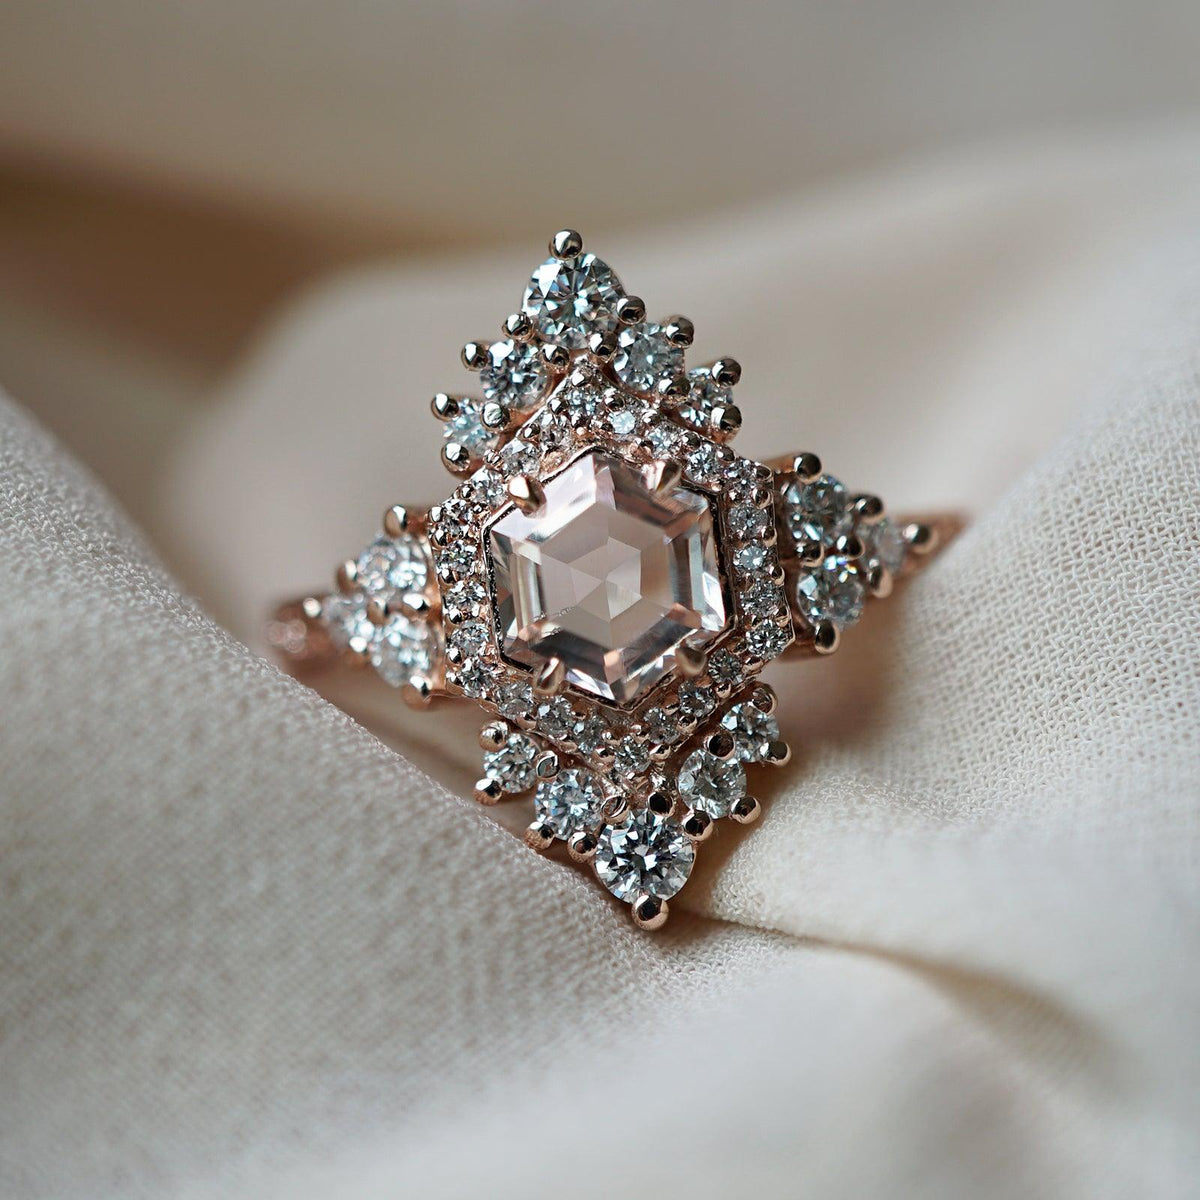 Chandelier Morganite Diamond Ring in 14K and 18K Gold - Tippy Taste Jewelry